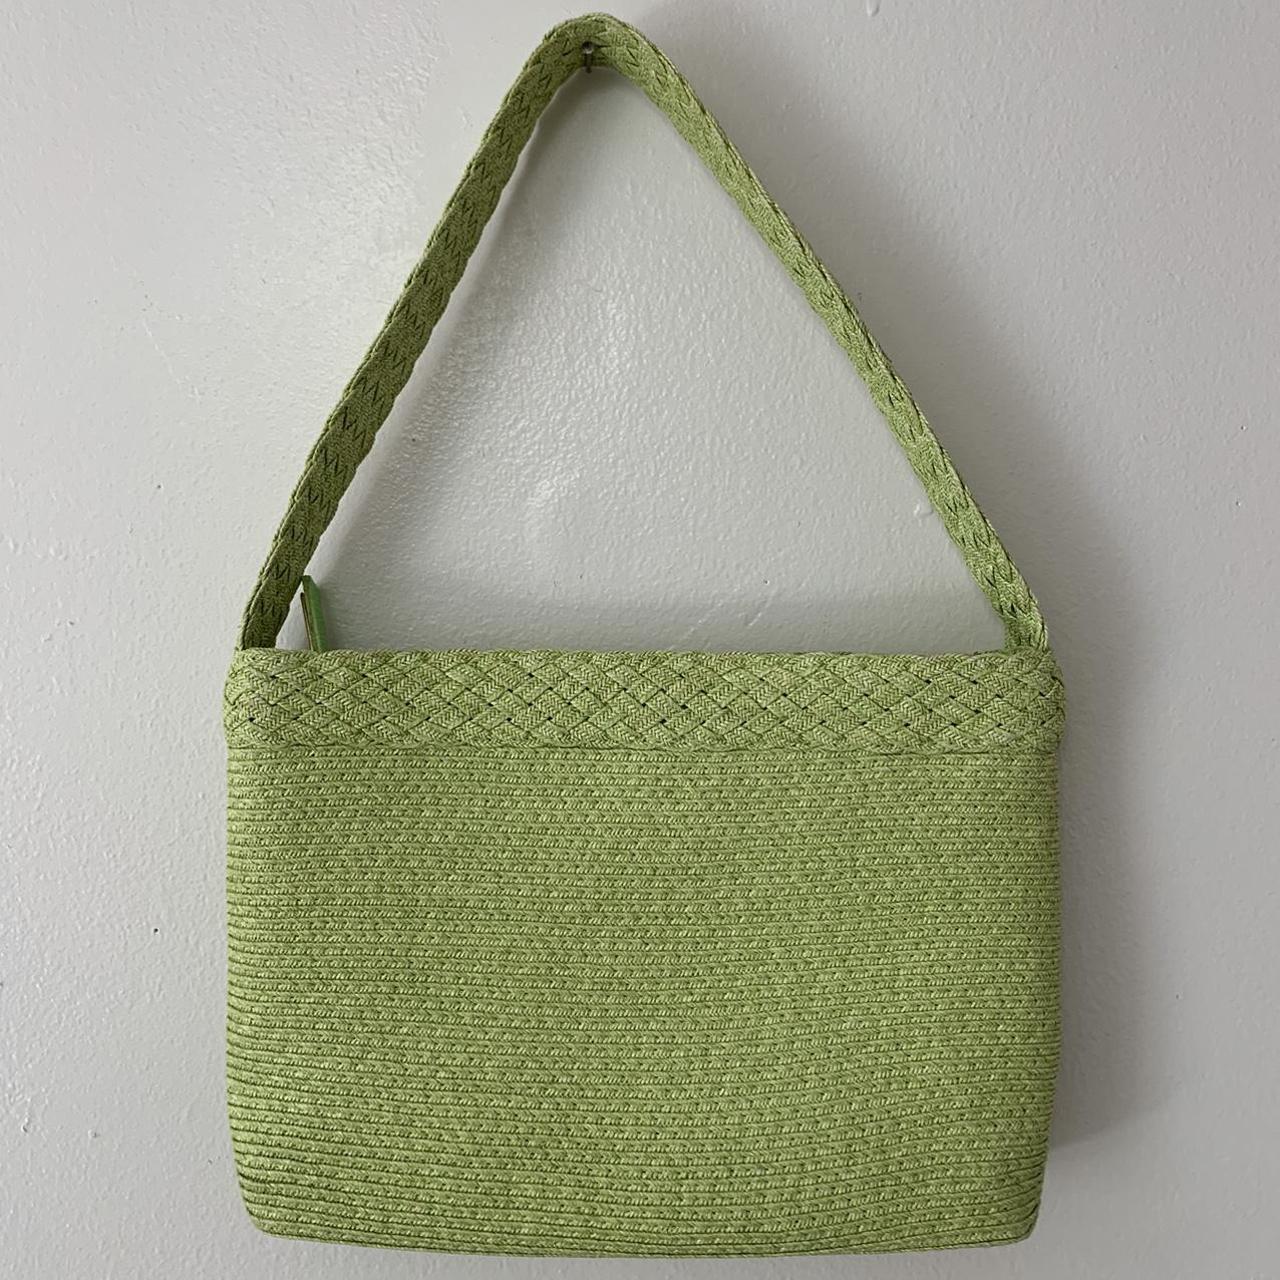 Product Image 1 - Lime green straw mini bag.